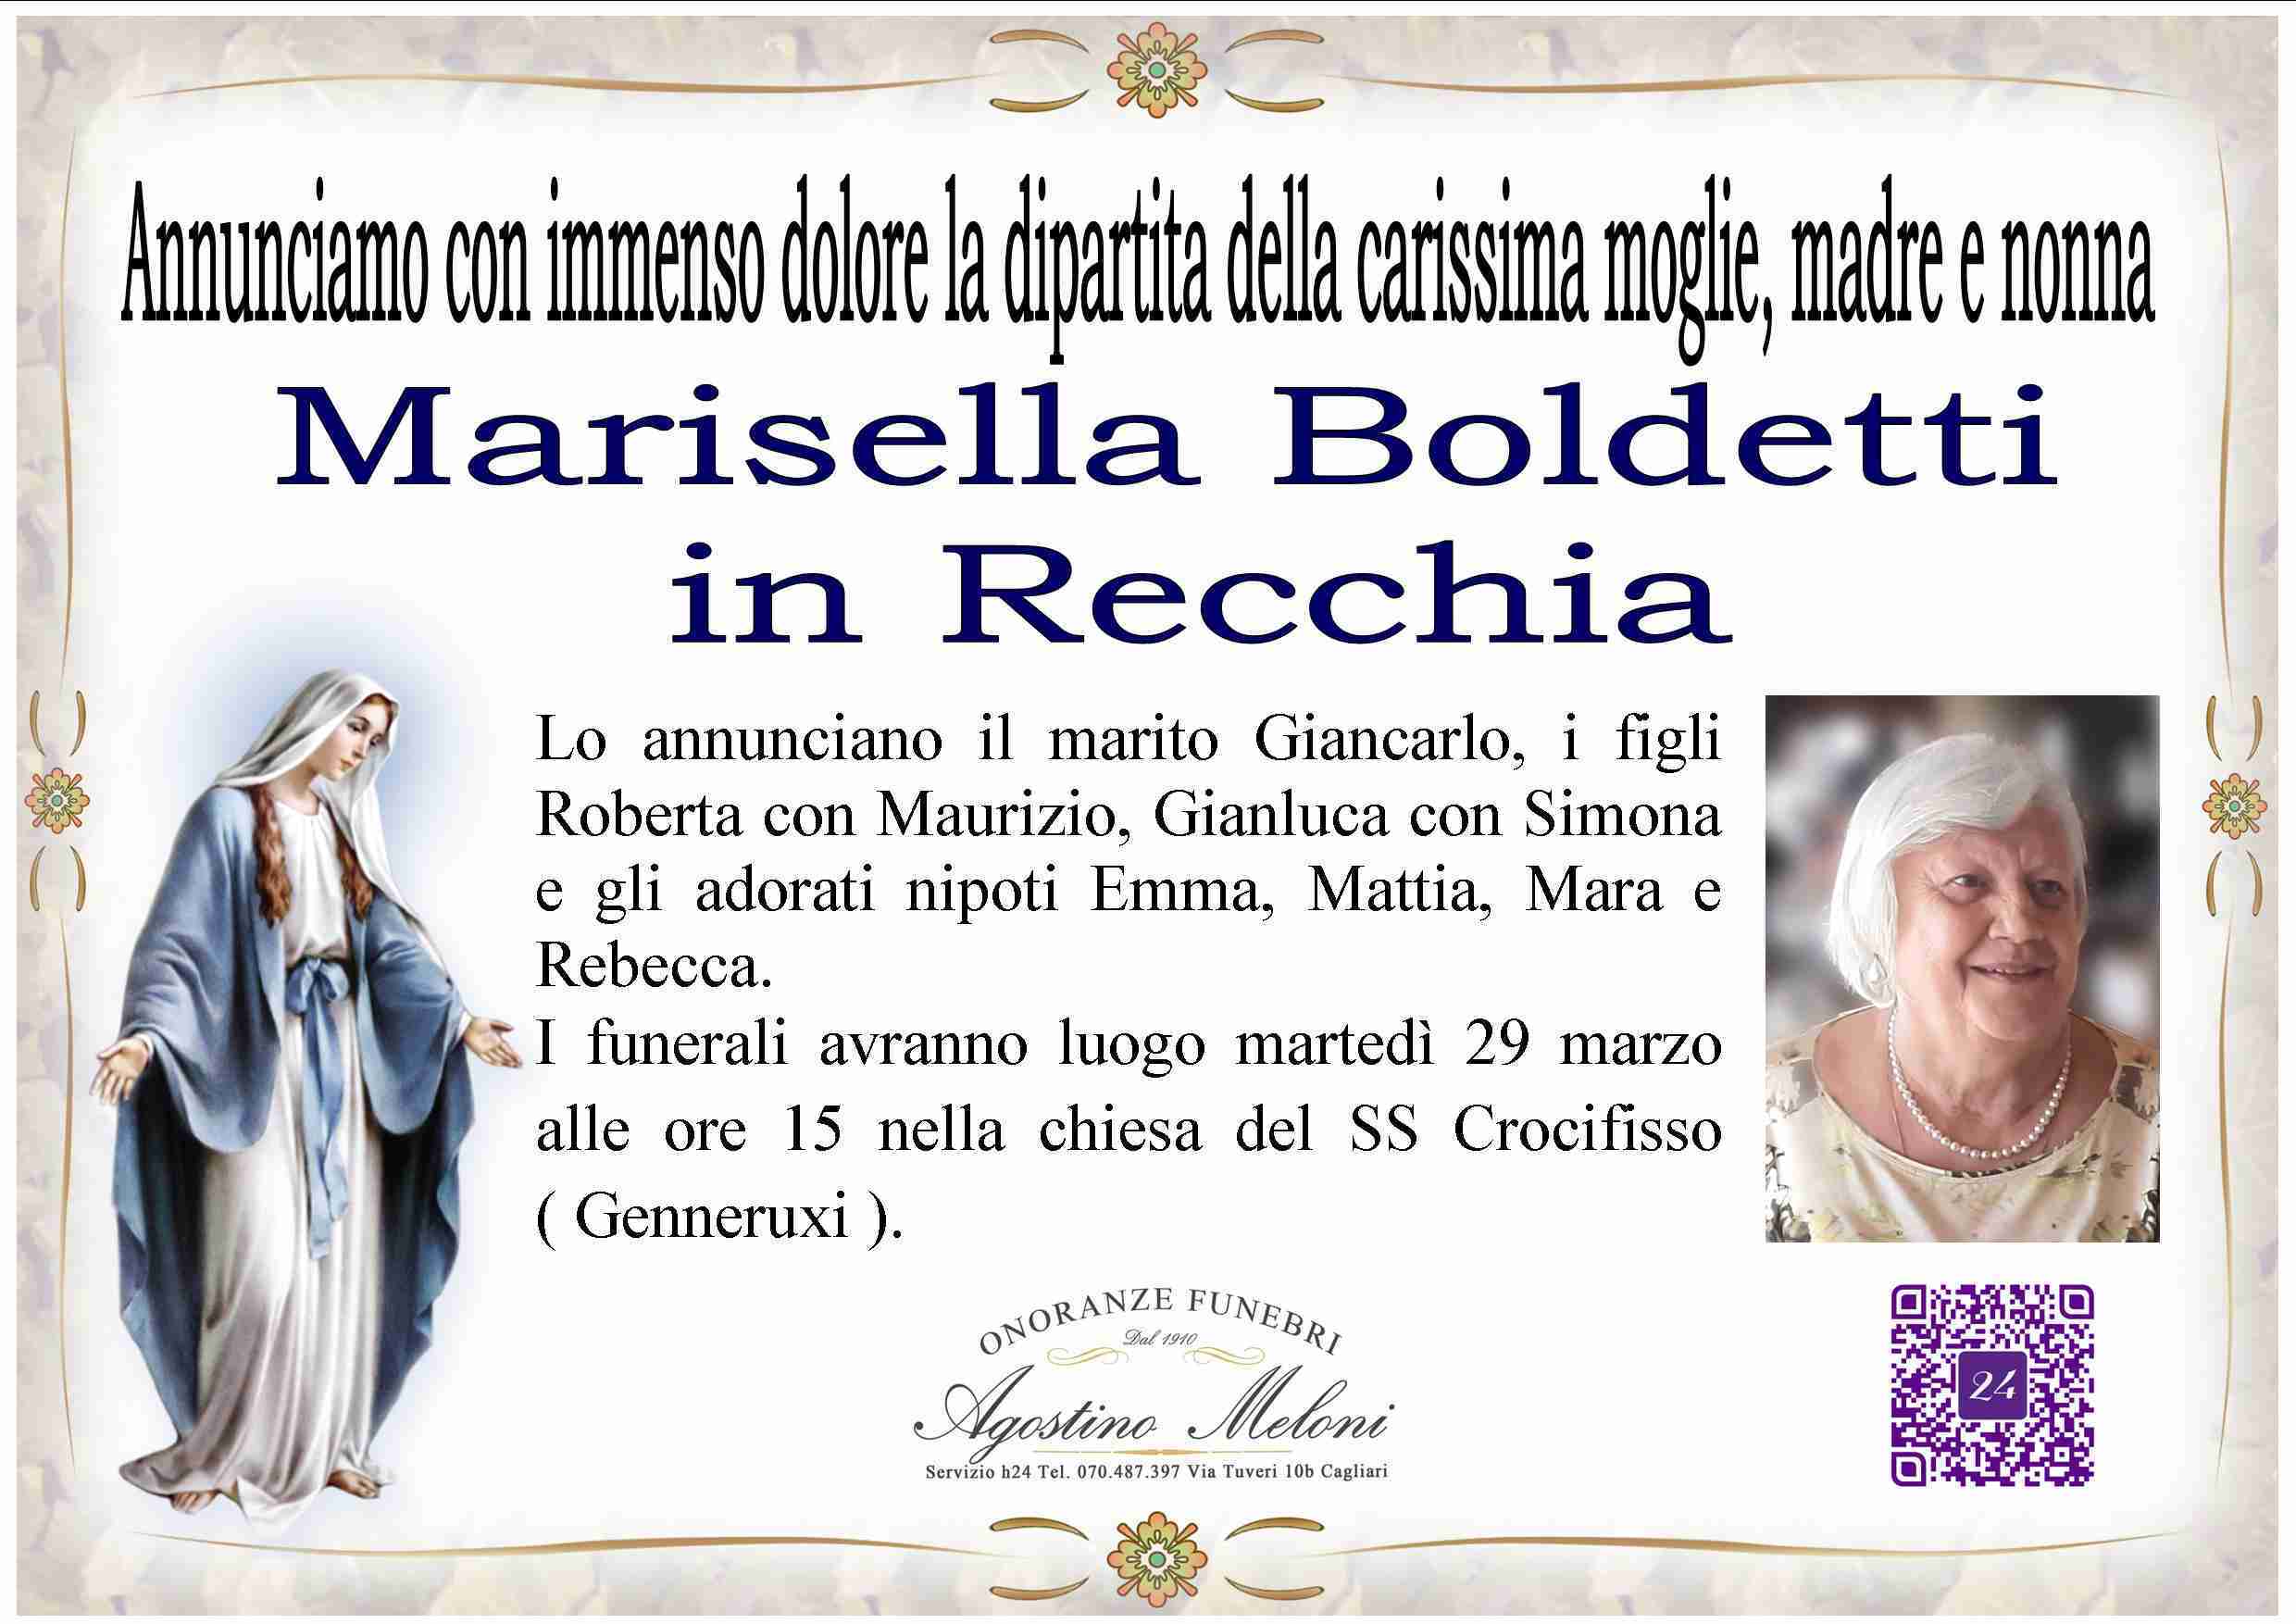 Marisella Boldetti